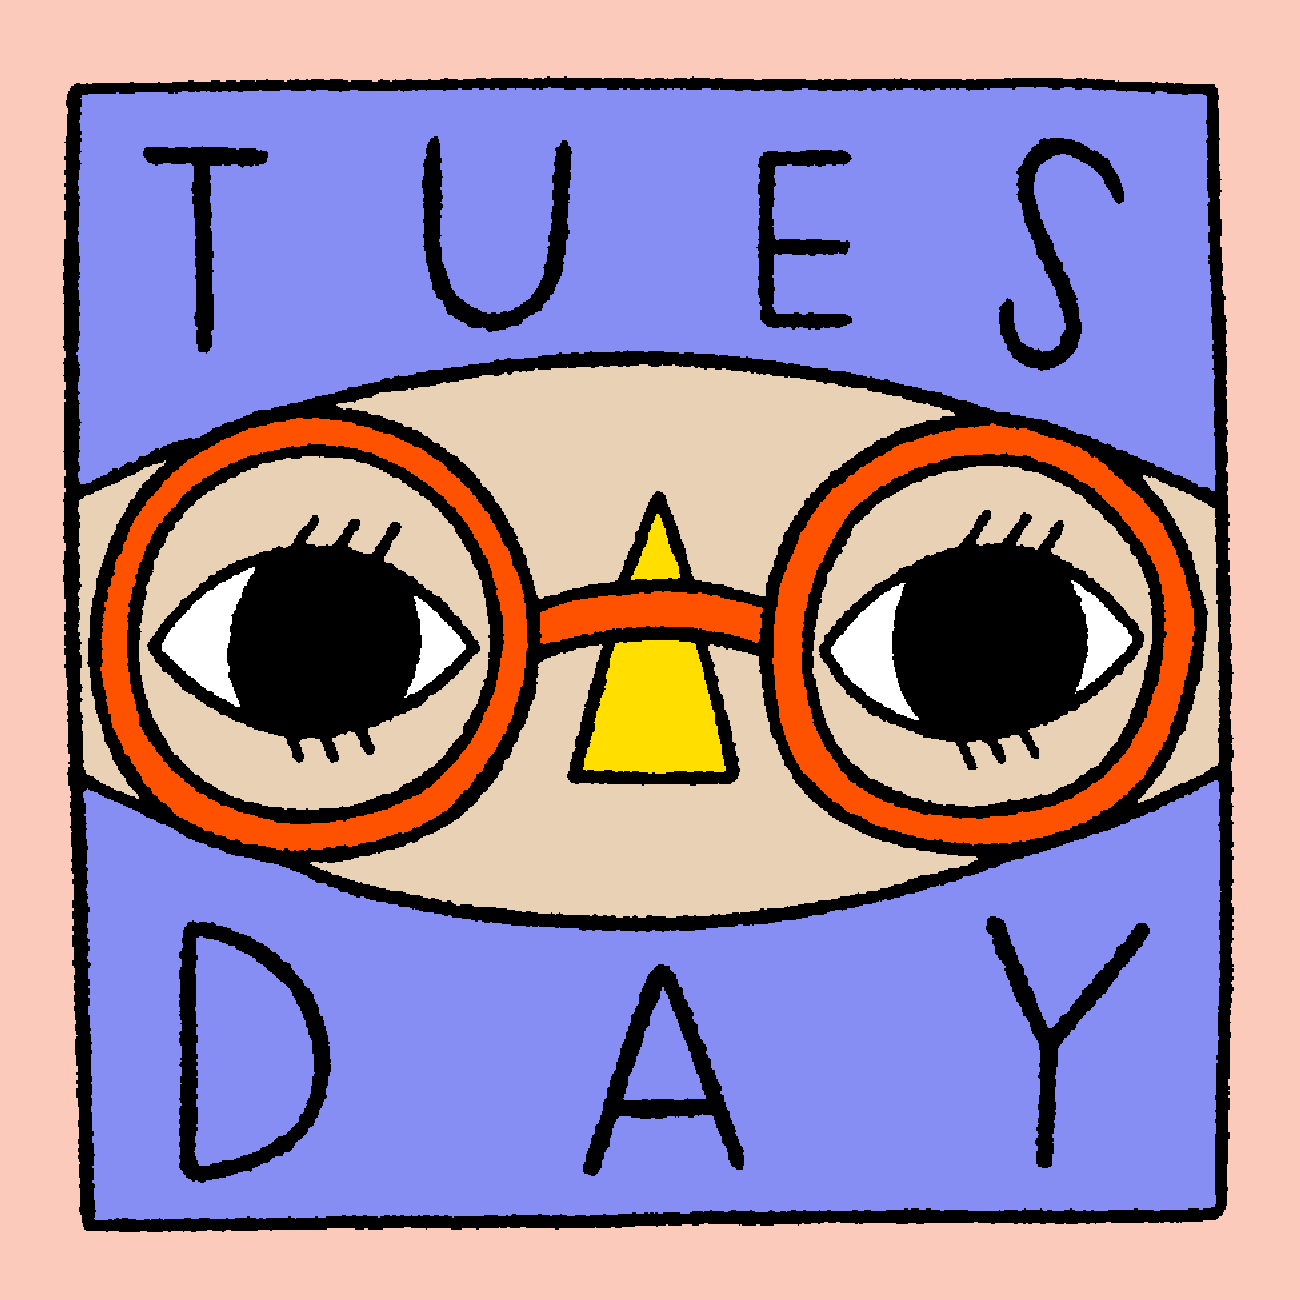 Illustrated gif. Blinking eyes behind round orange glasses peek through a purple frame that says, "Tuesday."